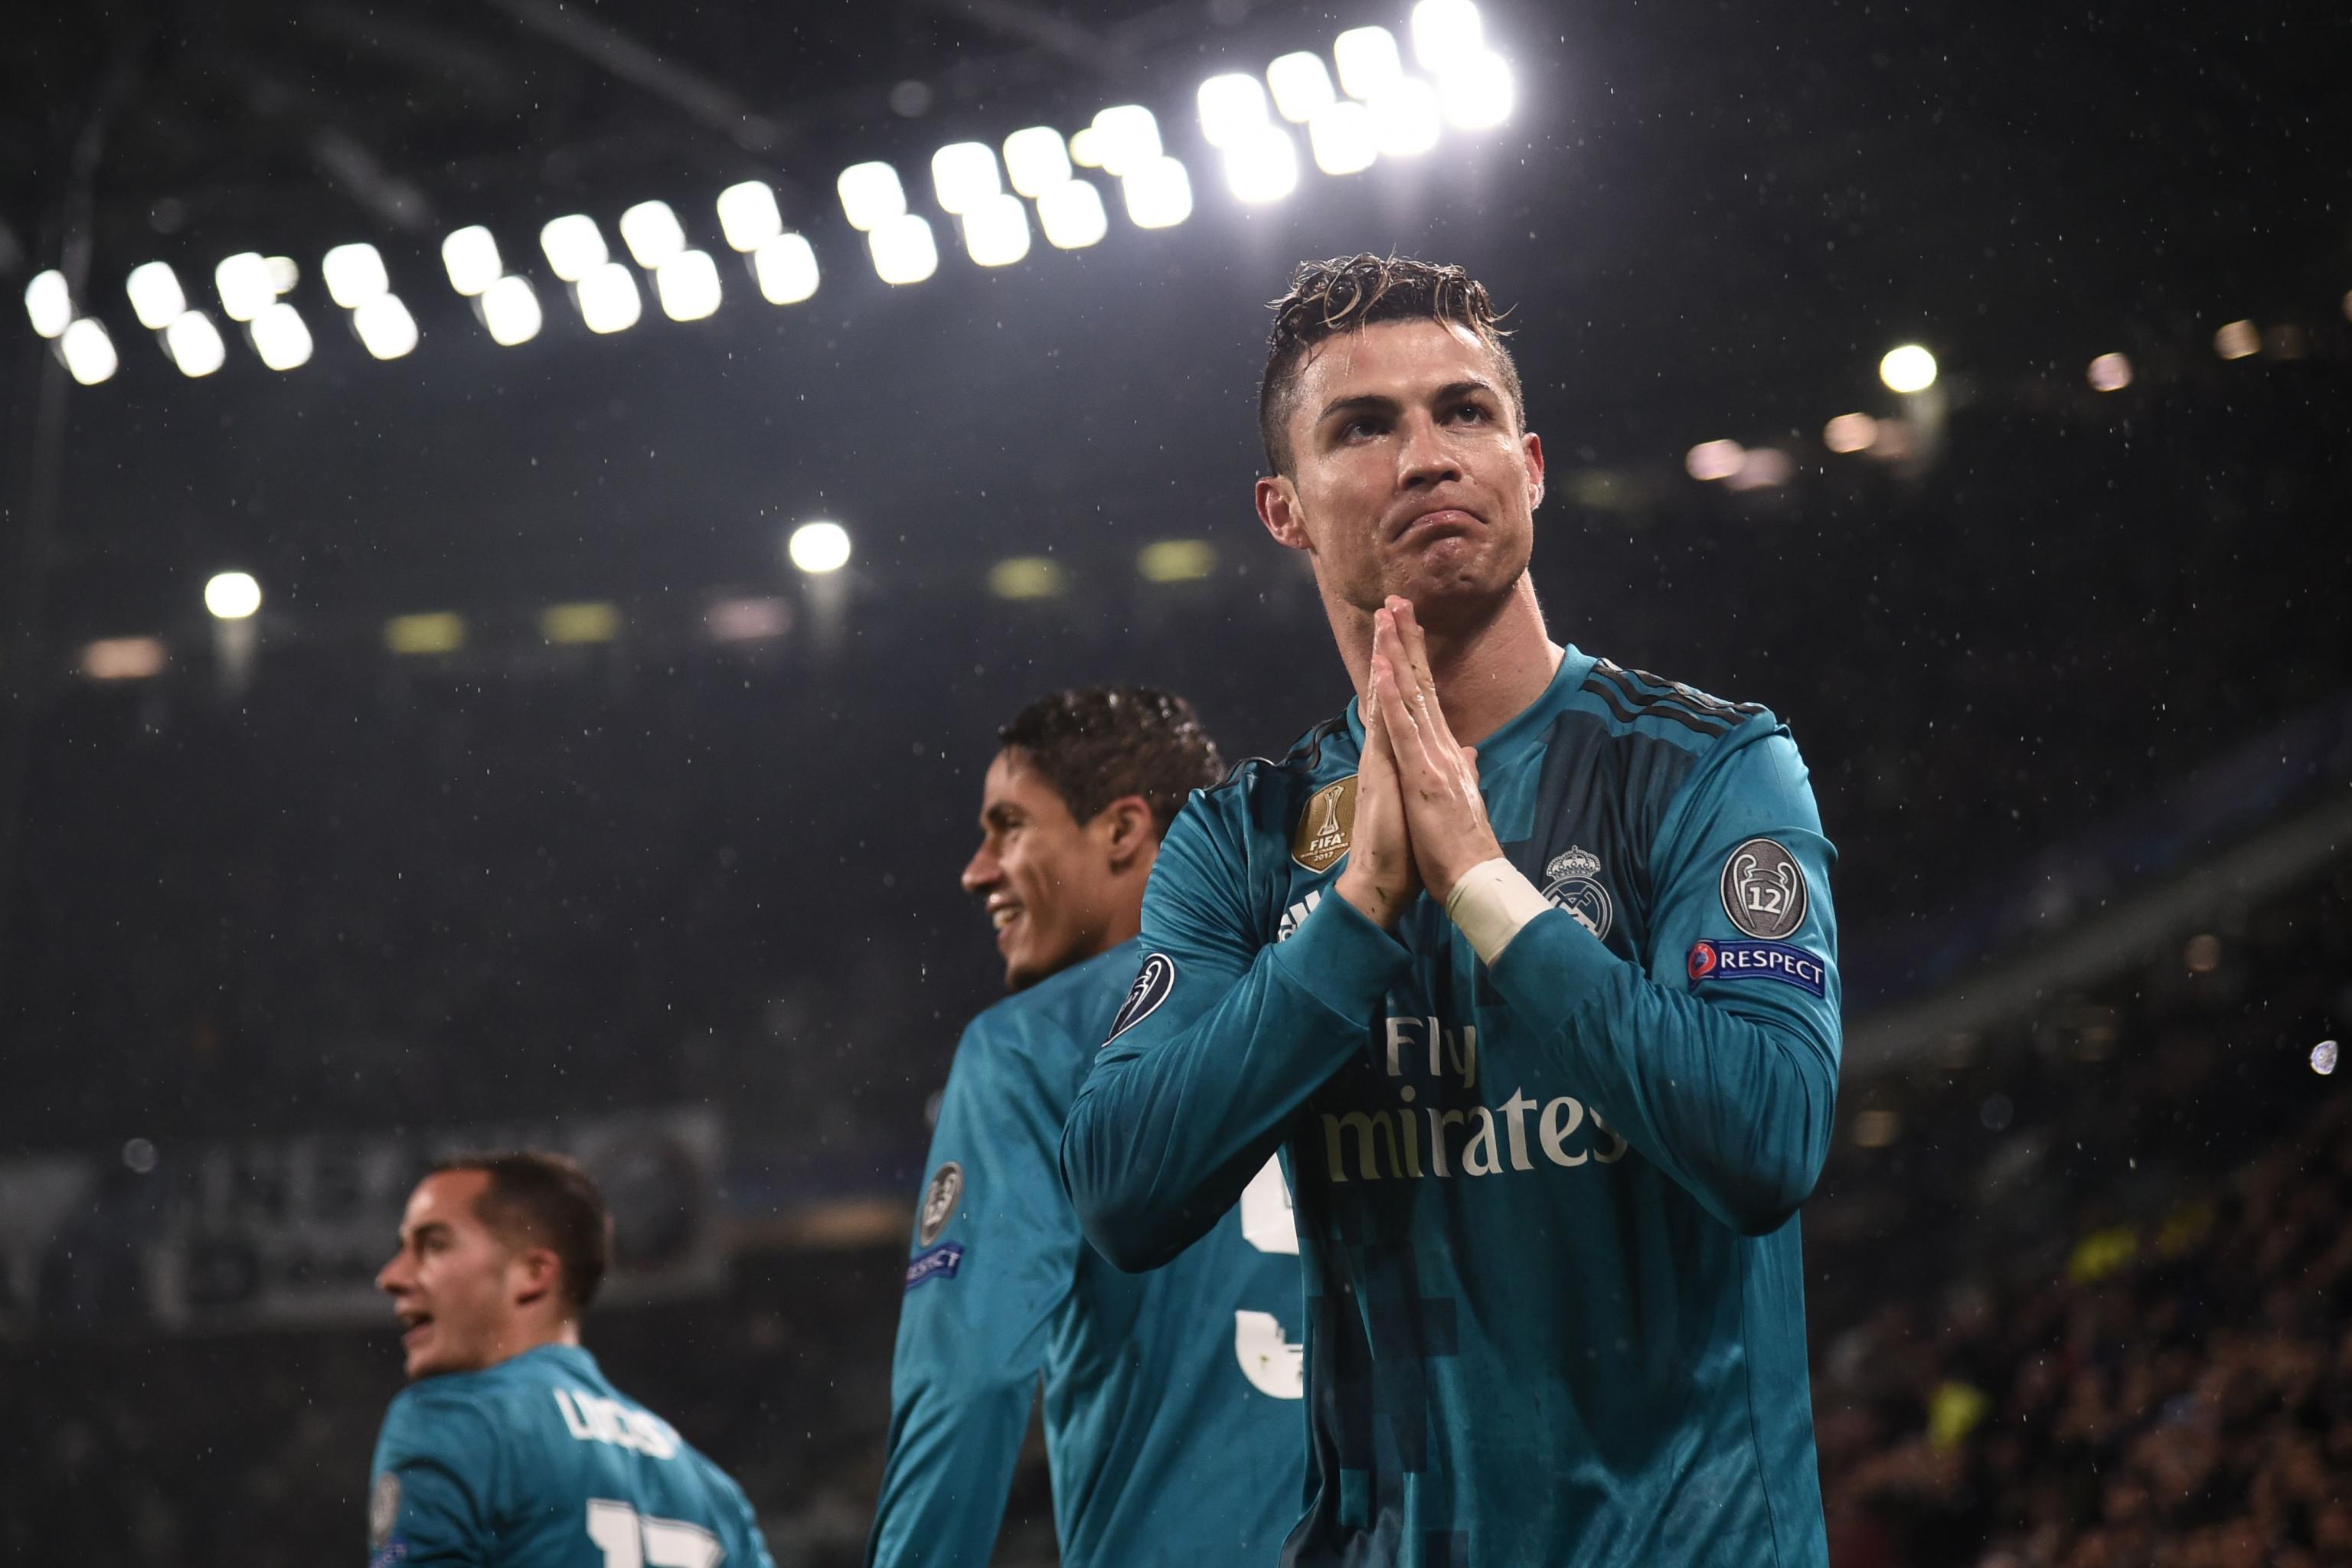 Real Madrid win Champions League as Cristiano Ronaldo double defeats Juve, Champions  League